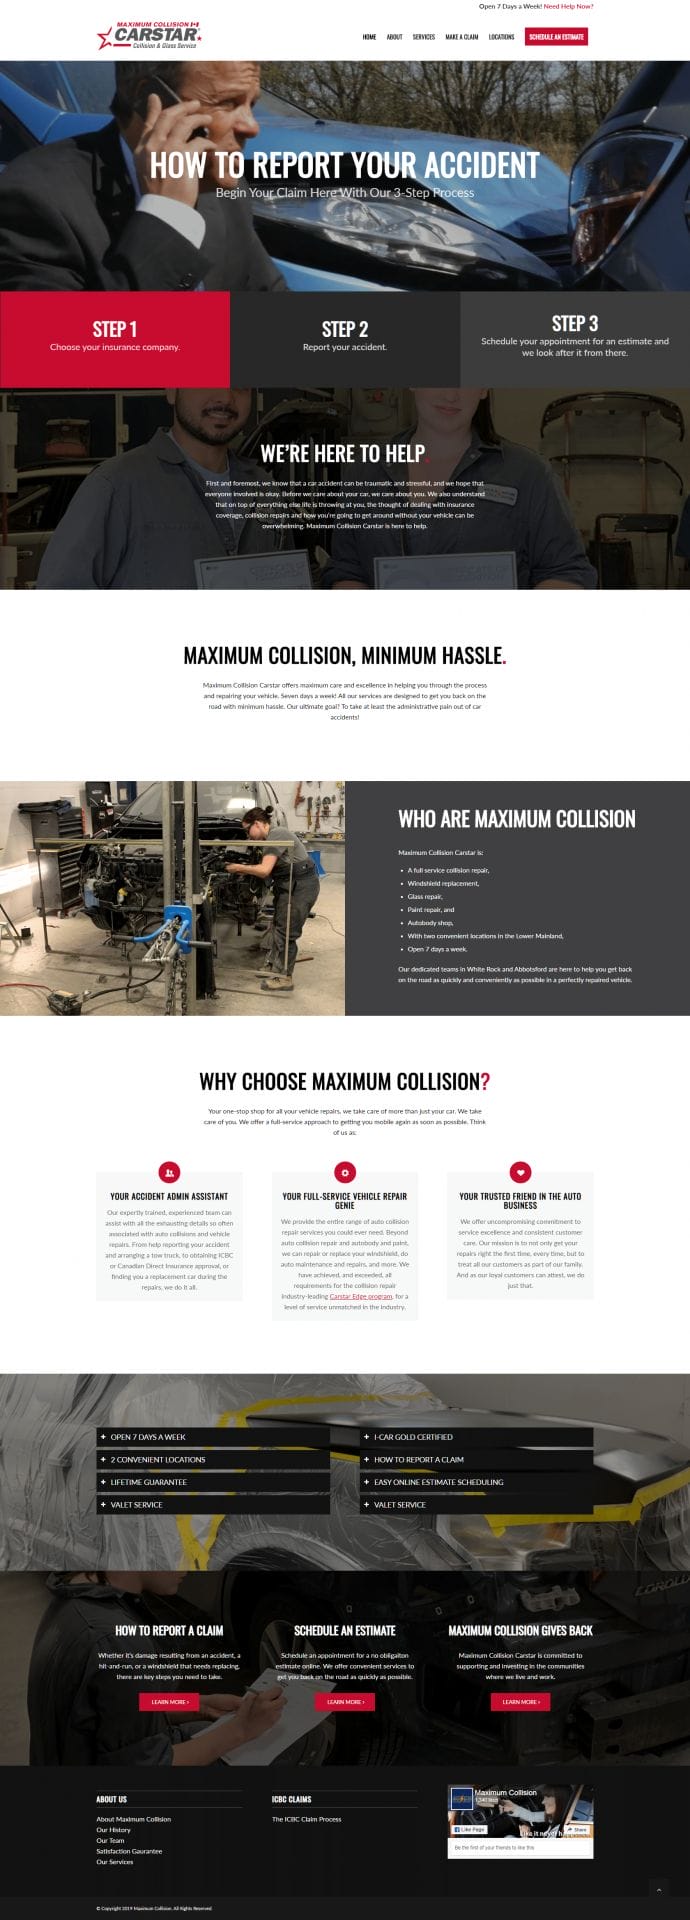 Maximum Collision website design homepage layout example